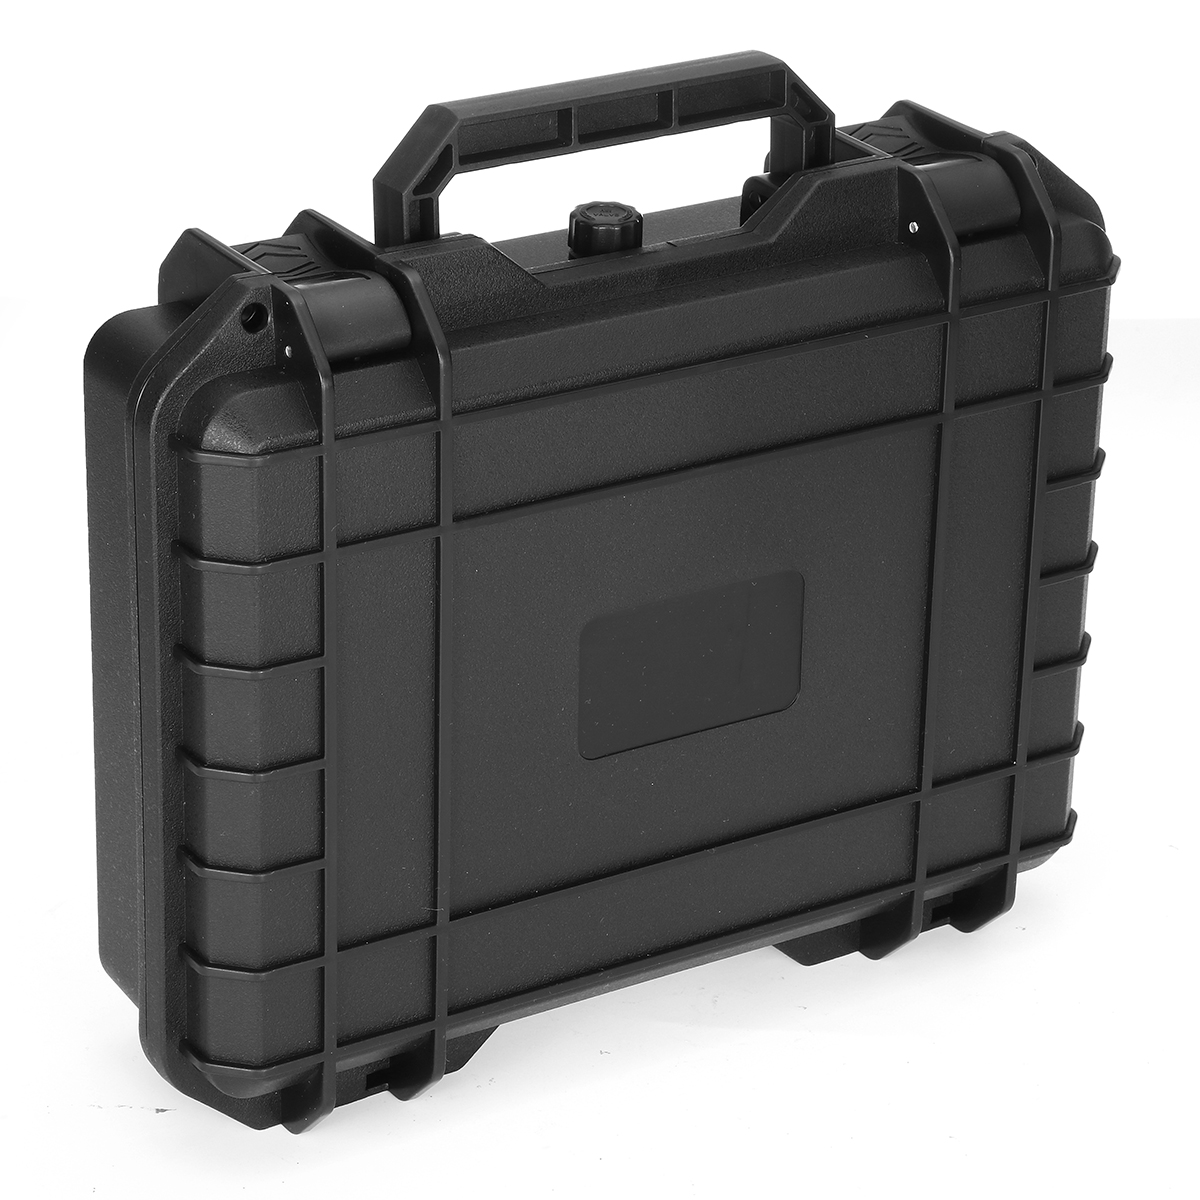 Waterproof-Hard-Carry-Case-Tool-Kits-Impact-Resistant-Shockproof-Storage-Box-New-1658756-6